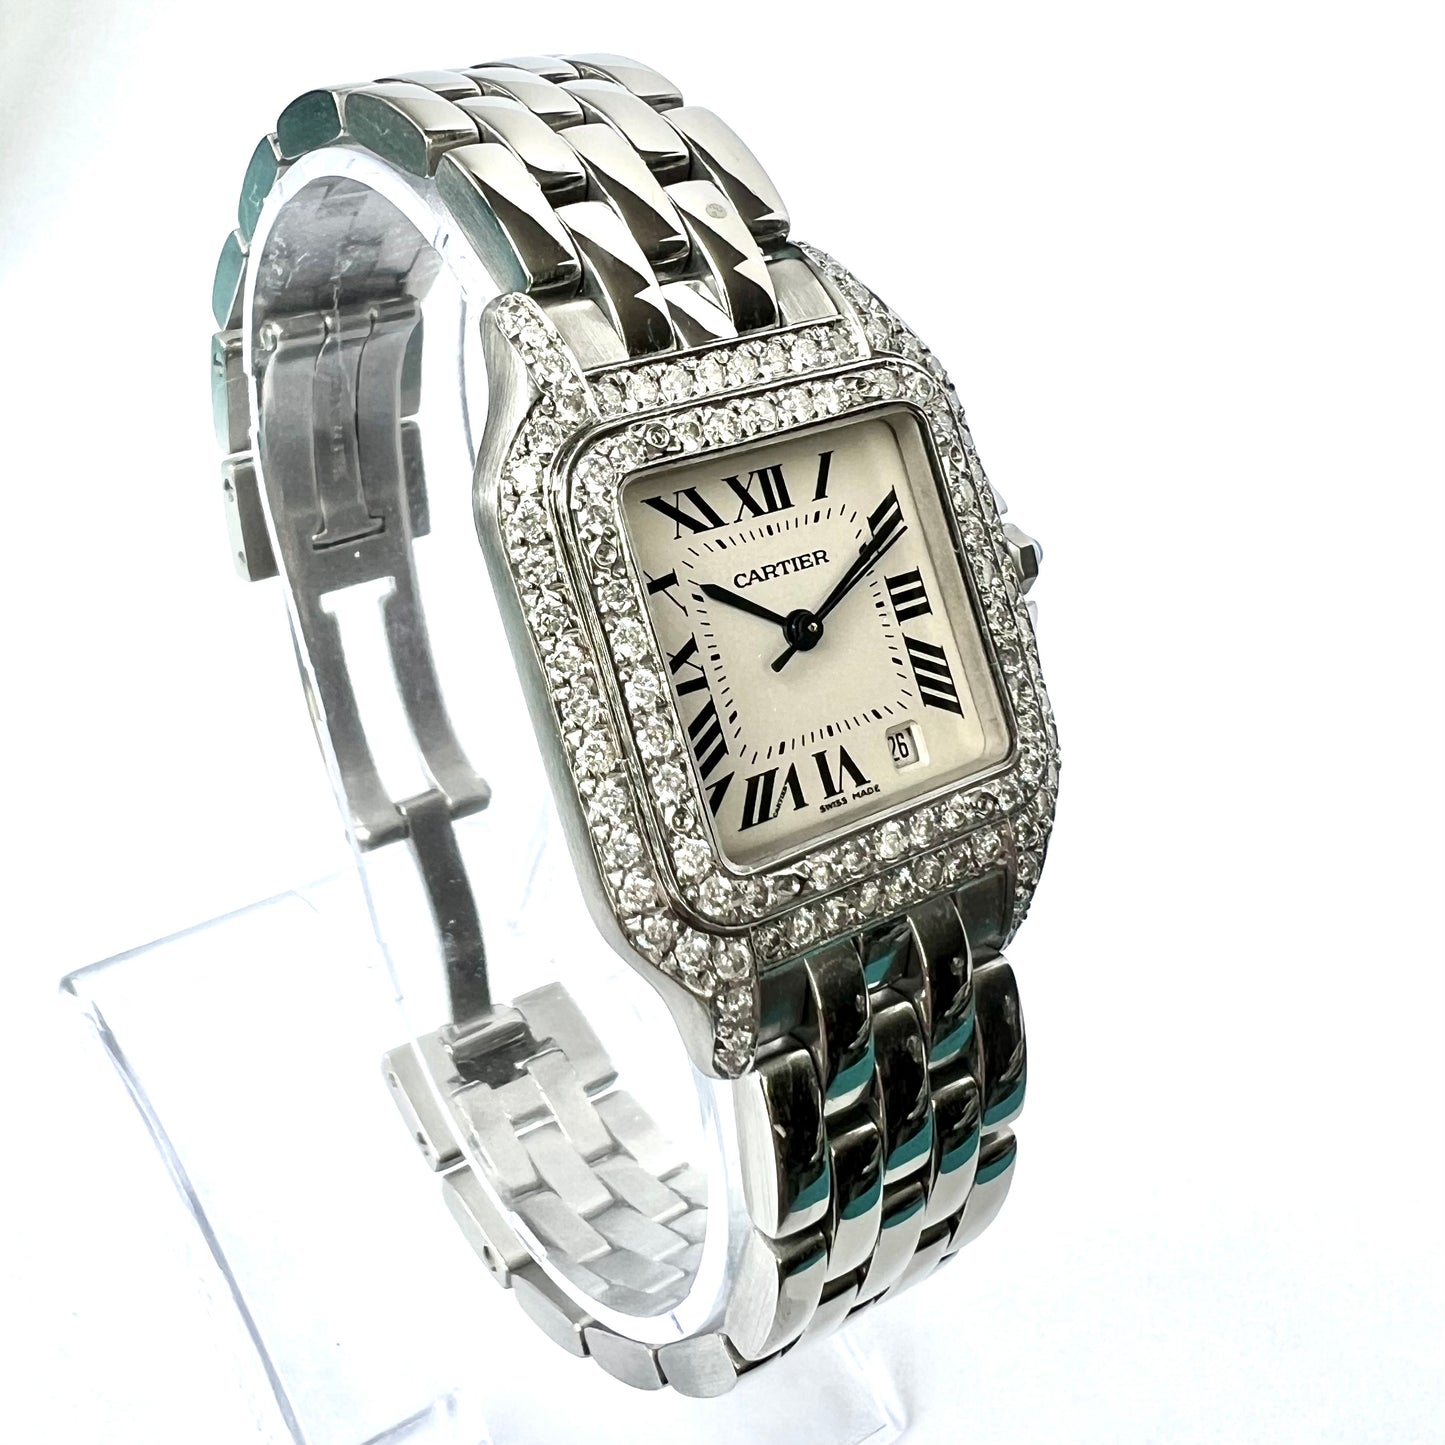 CARTIER PANTHERE 27mm Steel 1.25TCW Diamond Watch NEW Model